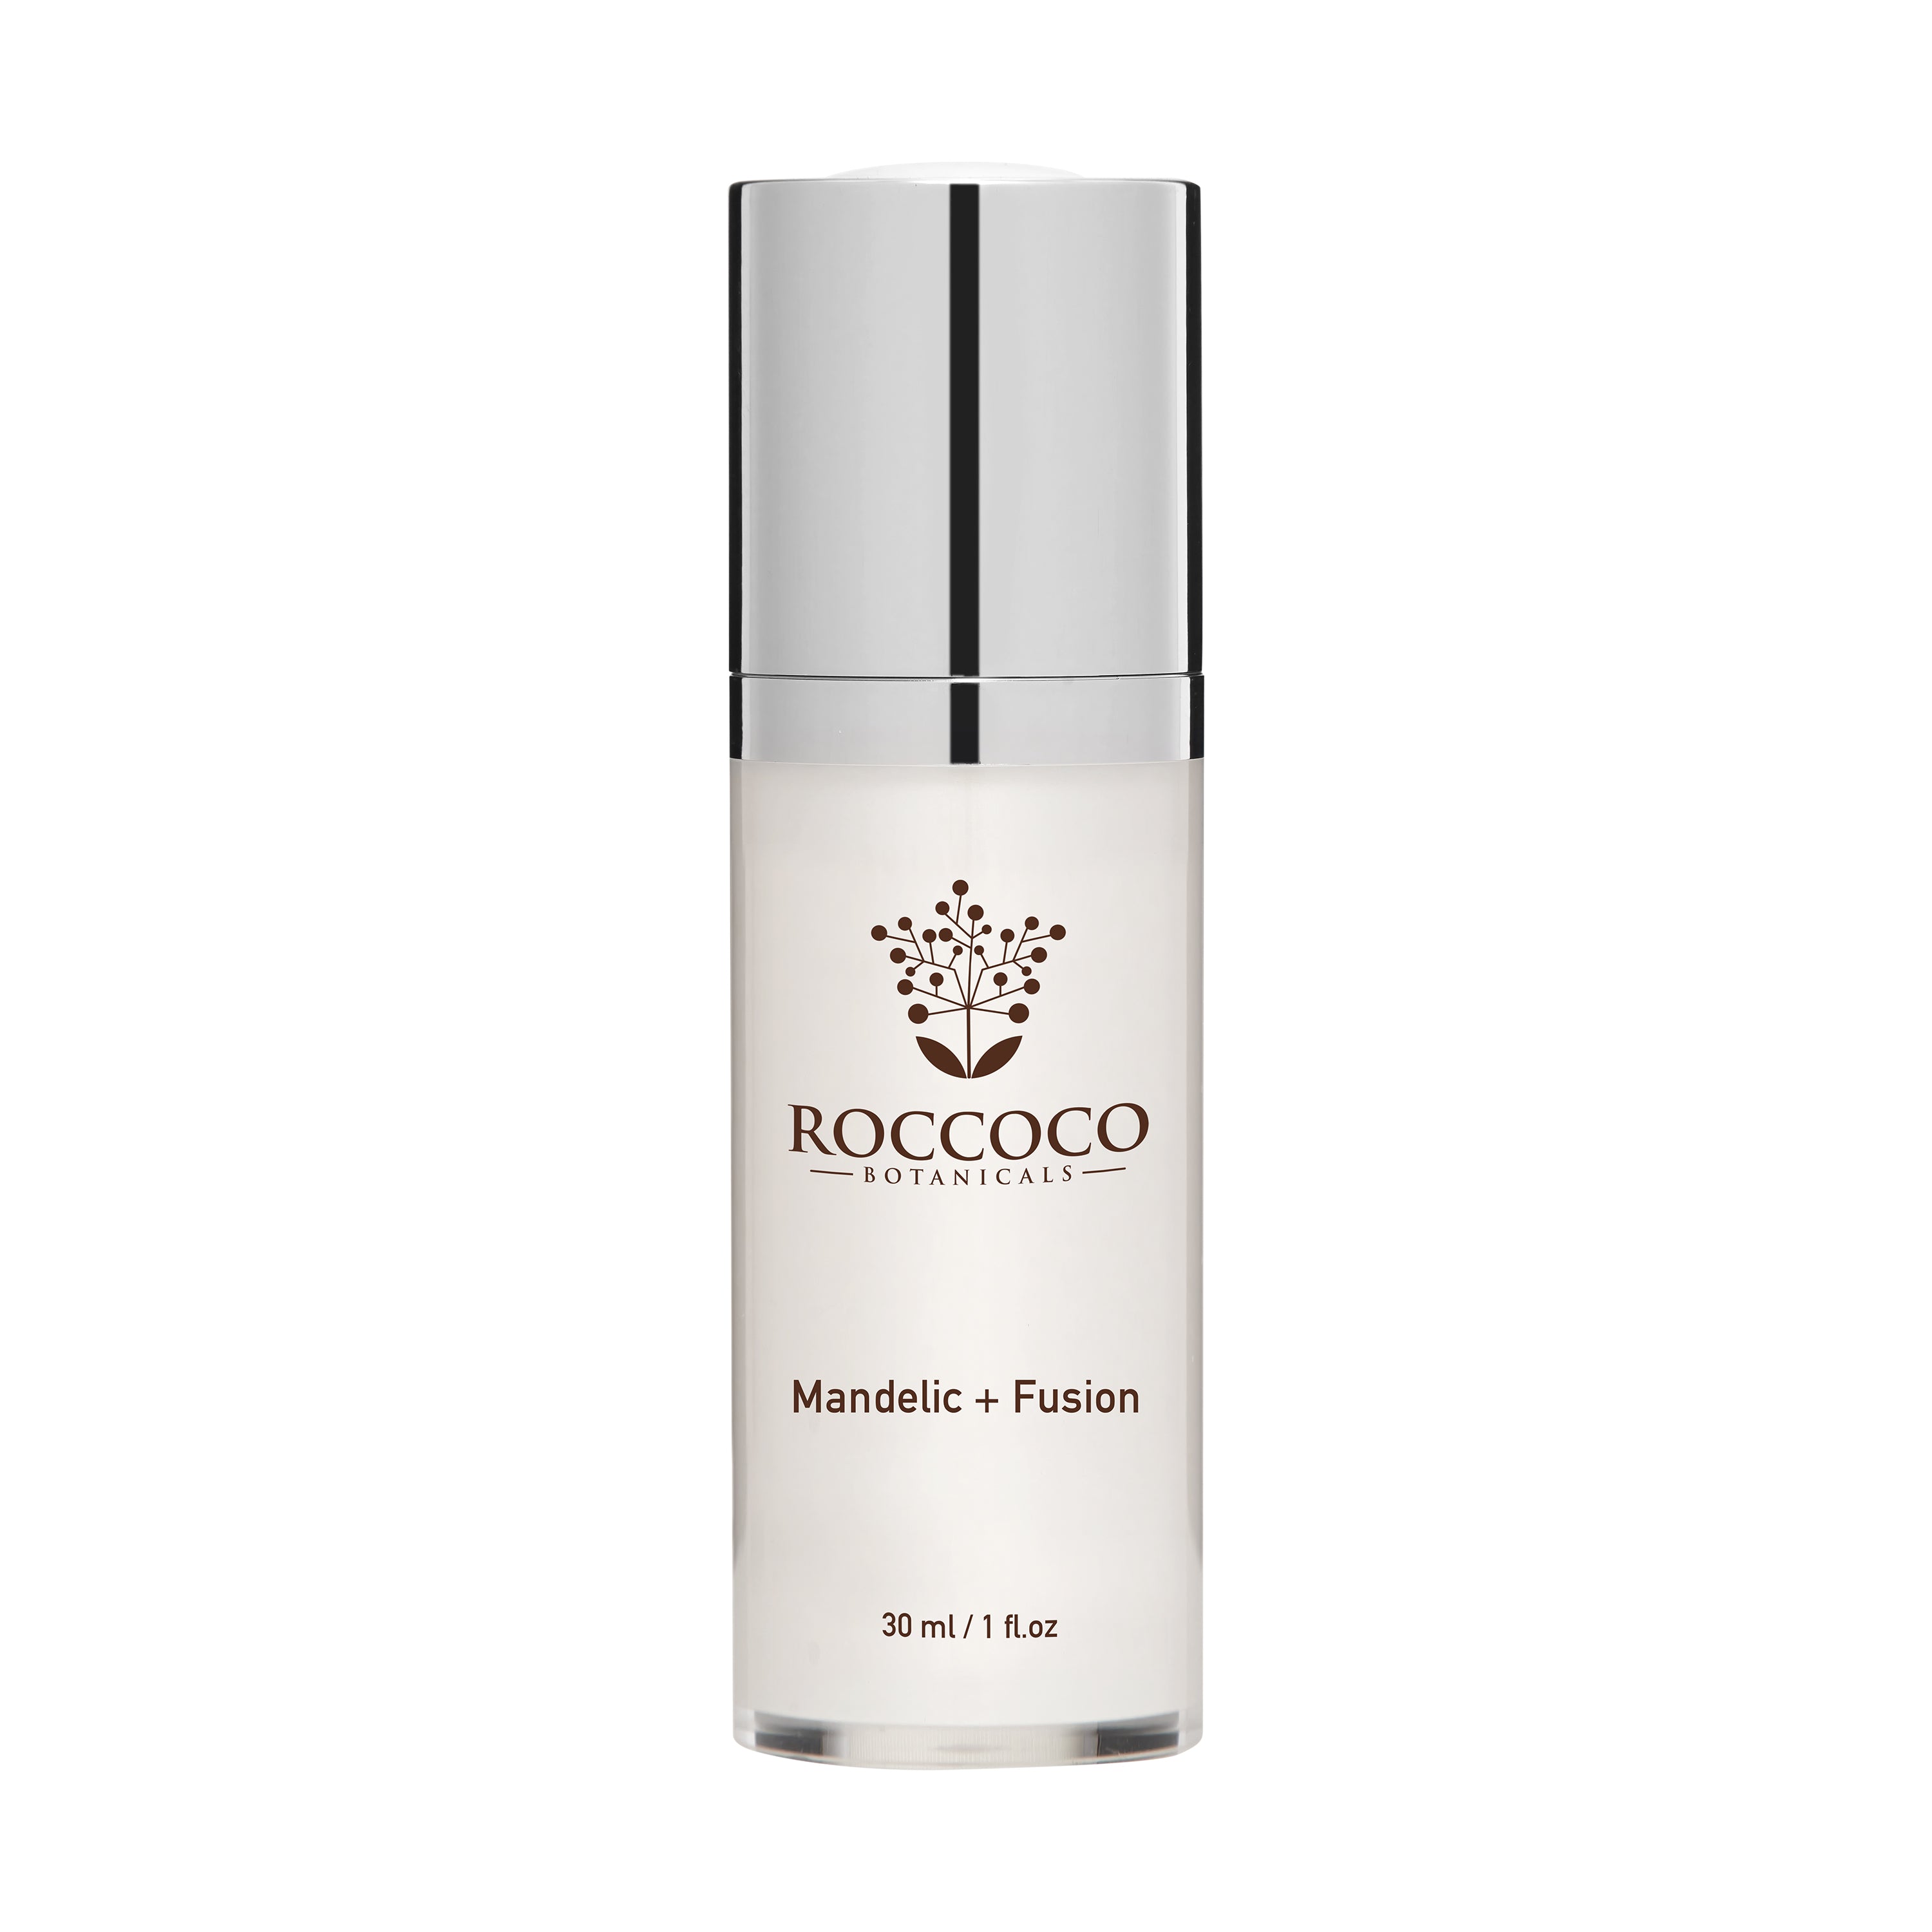 Roccoco Botanicals Mandelic + Fusion - Click to Buy!